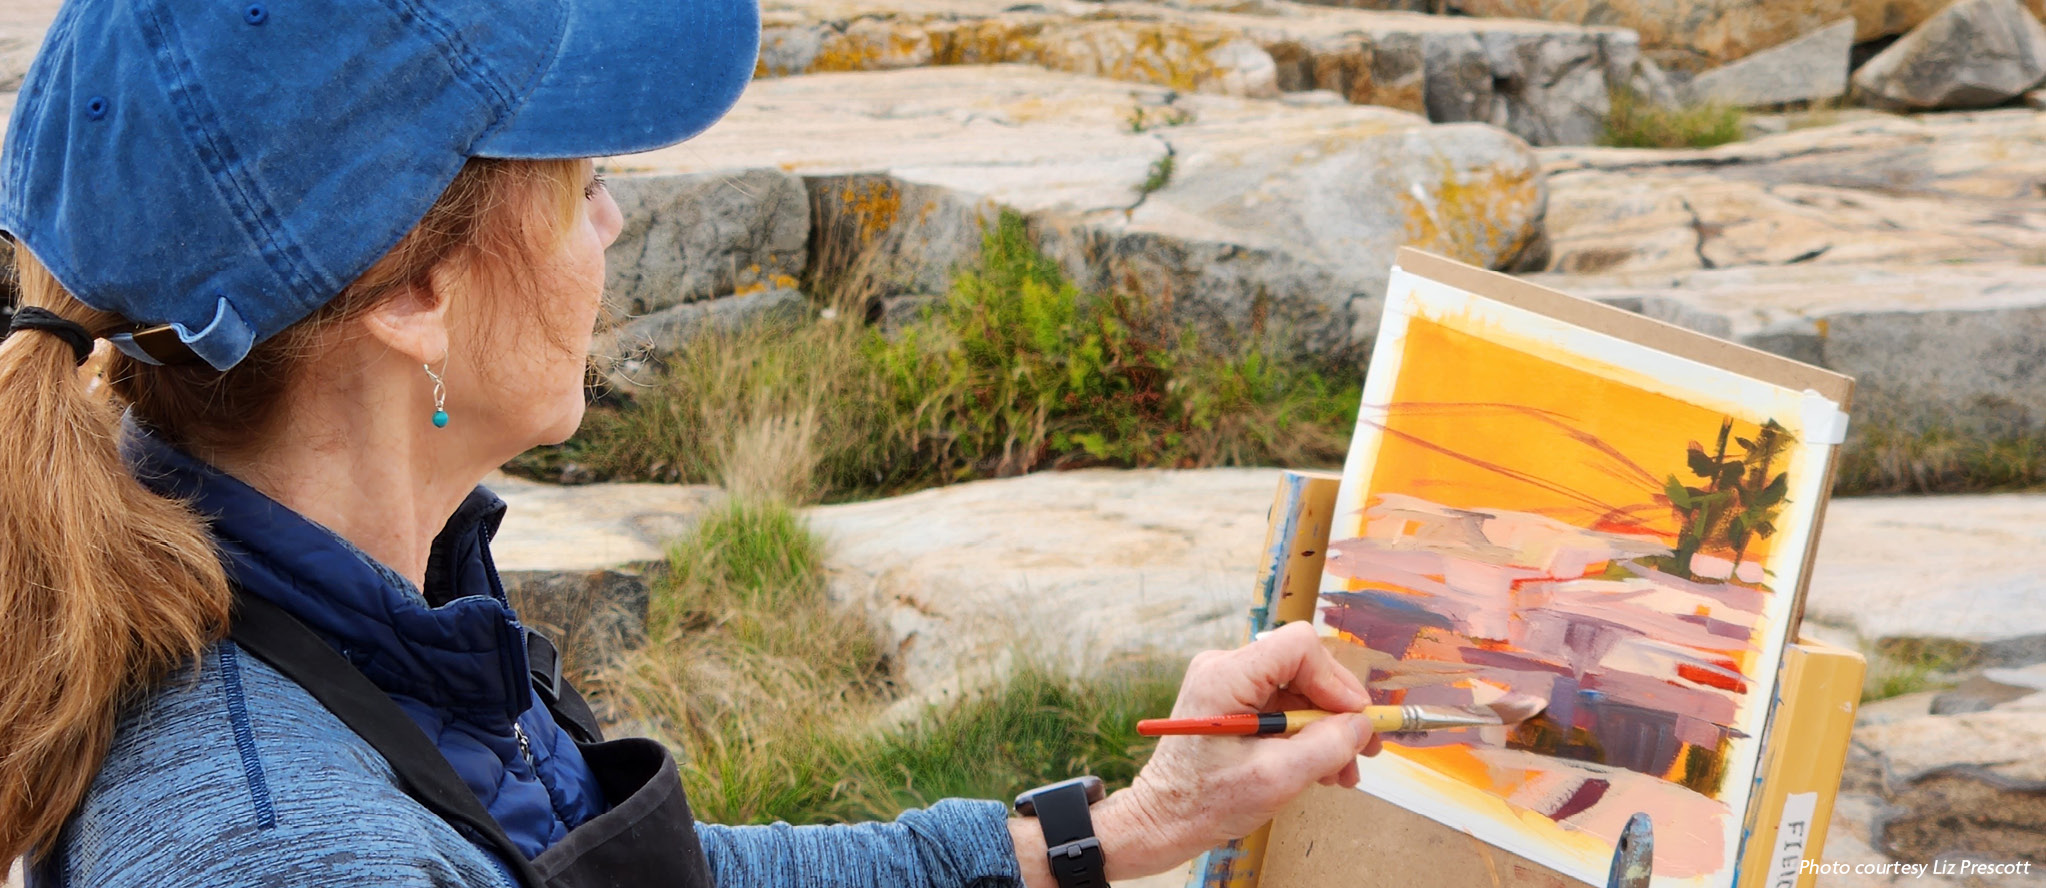 Artist Liz Prescott paints outdoors on the rocks along the Schoodic Peninsula coastline.